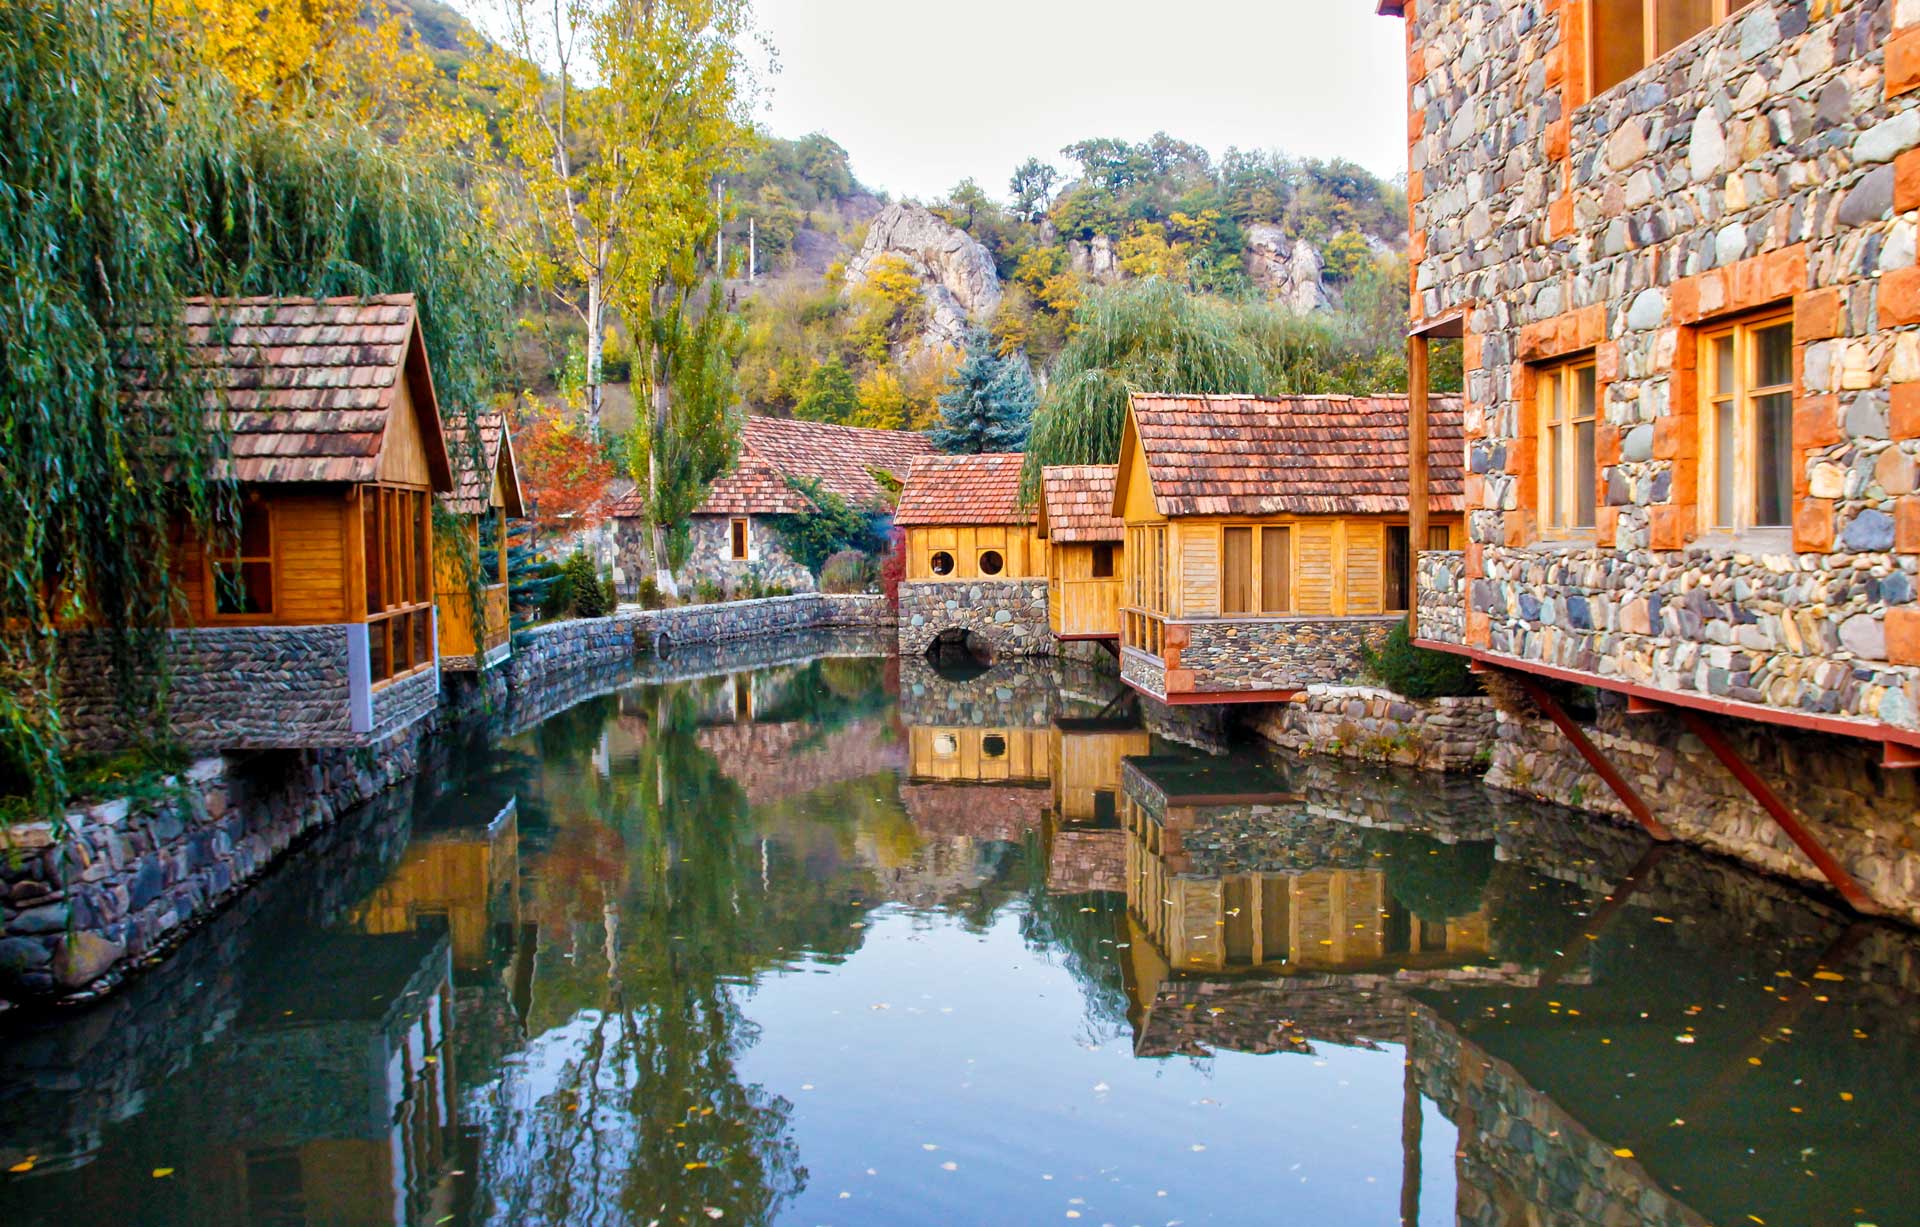 tourist town of Dilijan, Armenia. Little Switzerland of Armenia’’.